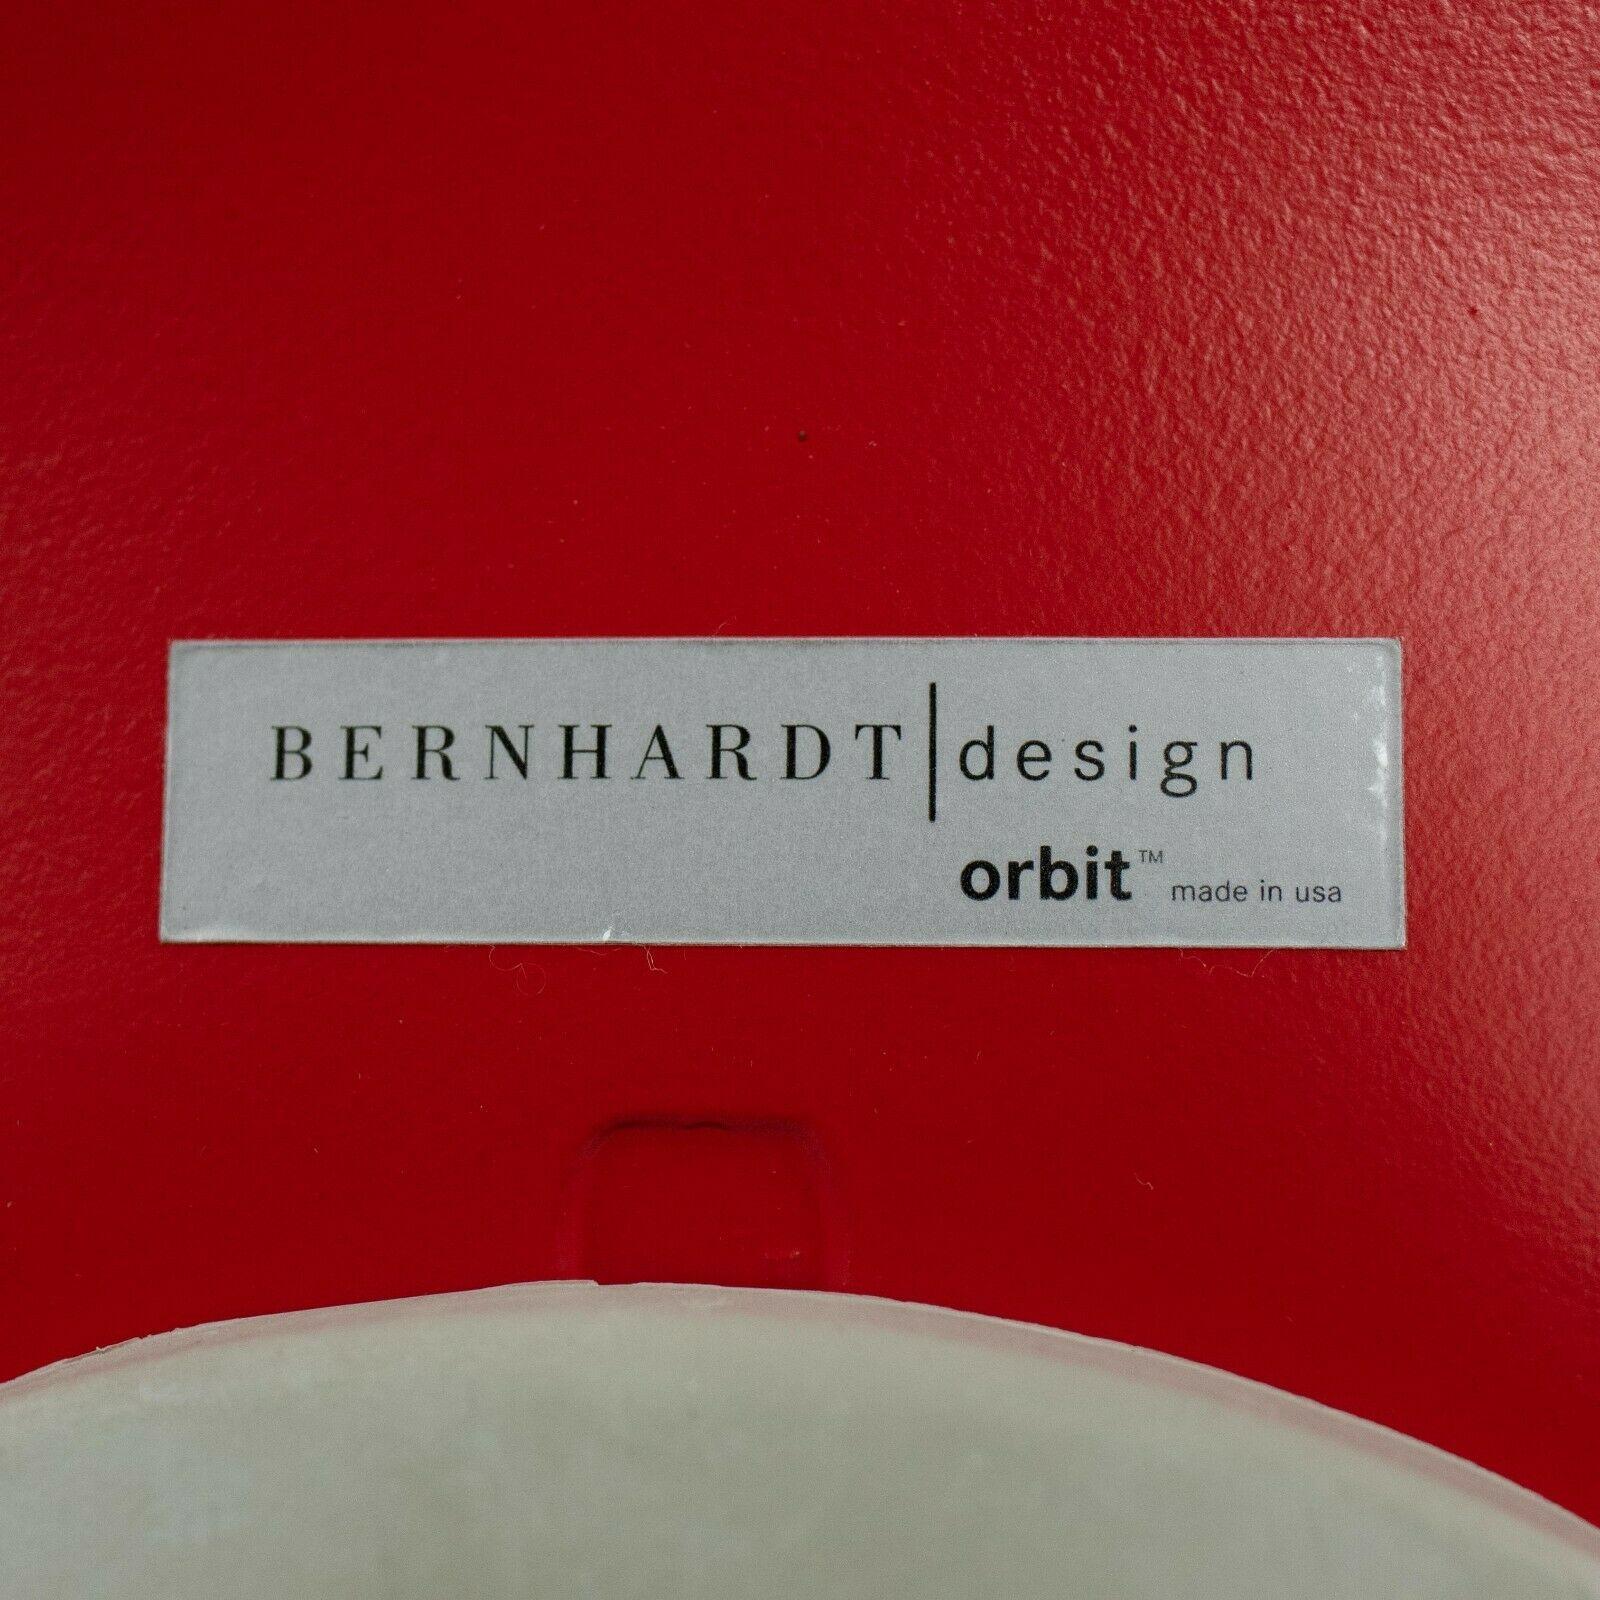 2010s Ross Lovegrove Orbit Chair by Bernhardt Design in Red Plastic Chrome Legs For Sale 6